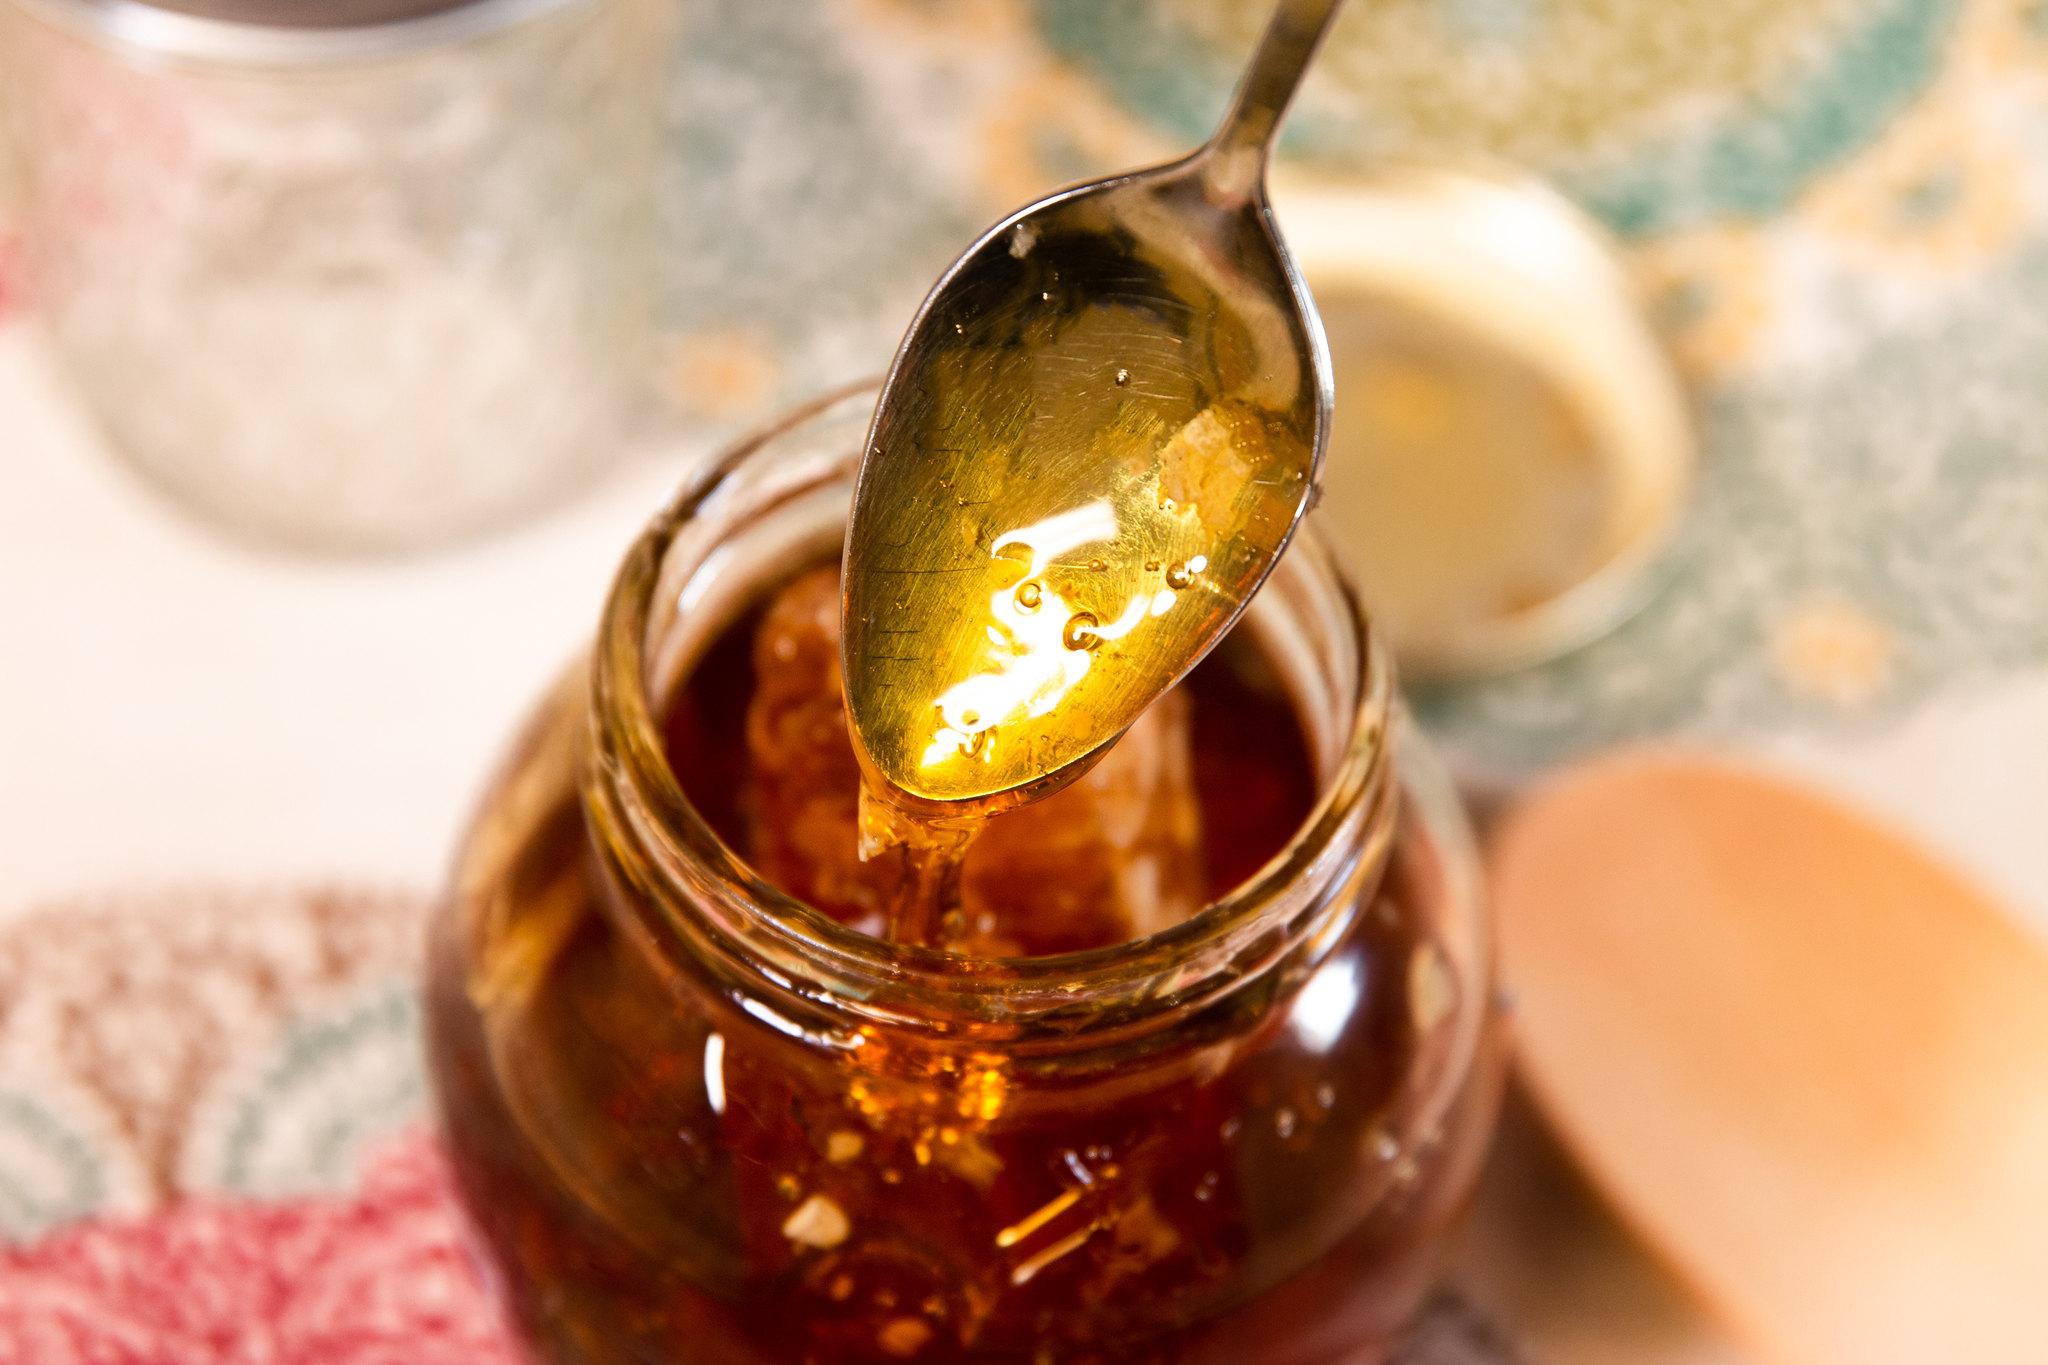 Honey måneskin. Клаудс мед. Romery Honey. A handful of Honey. Real Honey photos.